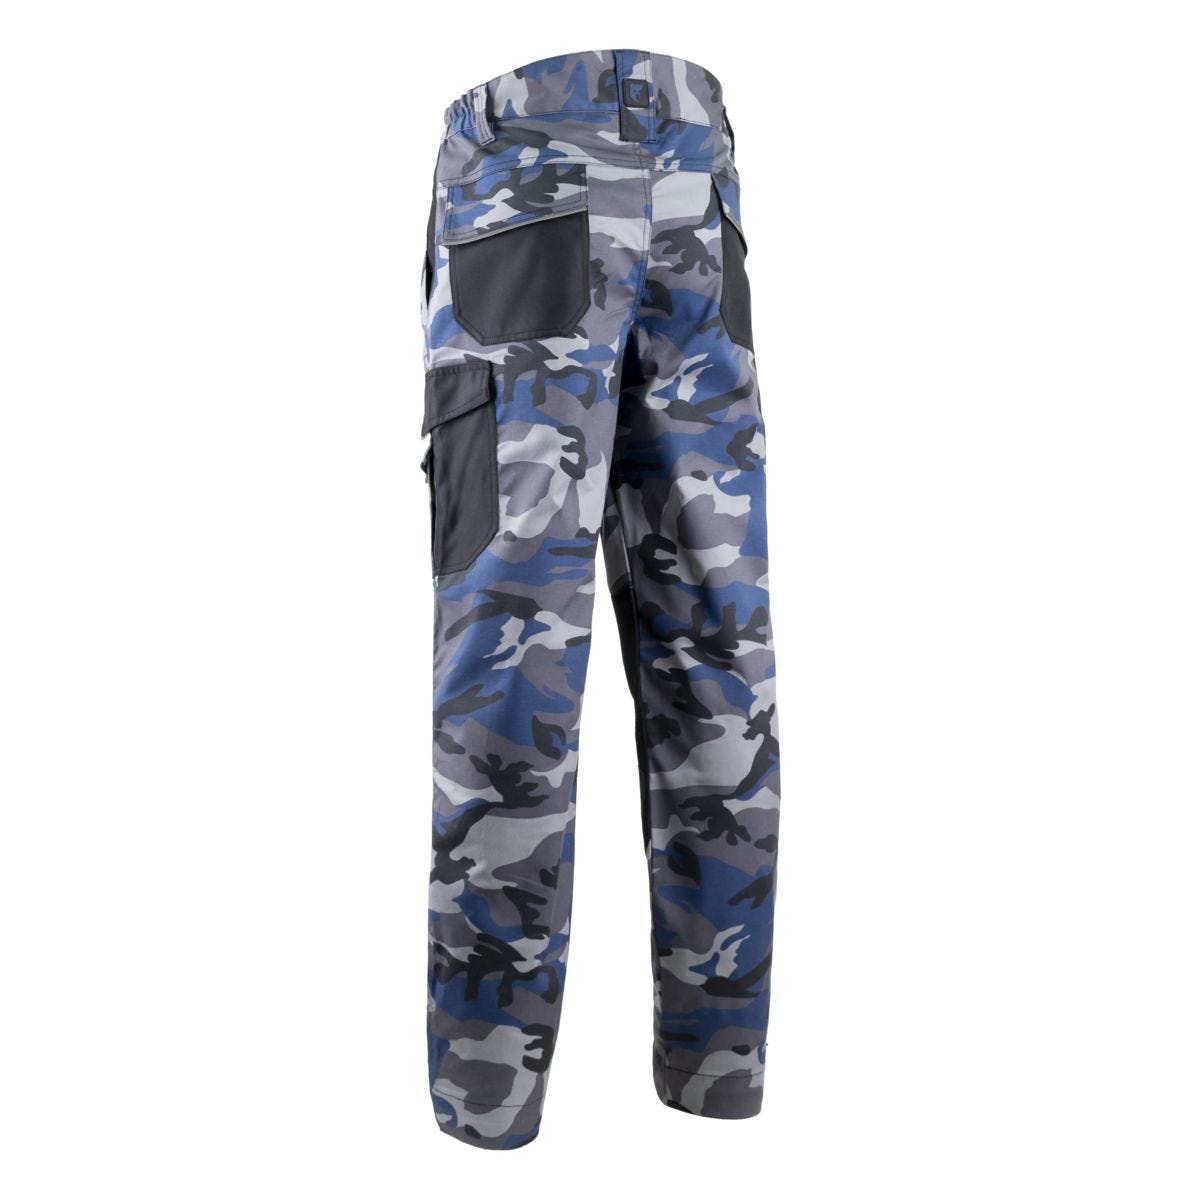 Pantalon KAMMO Camouflage Bleu-Gris - COVERGUARD - Taille M 1